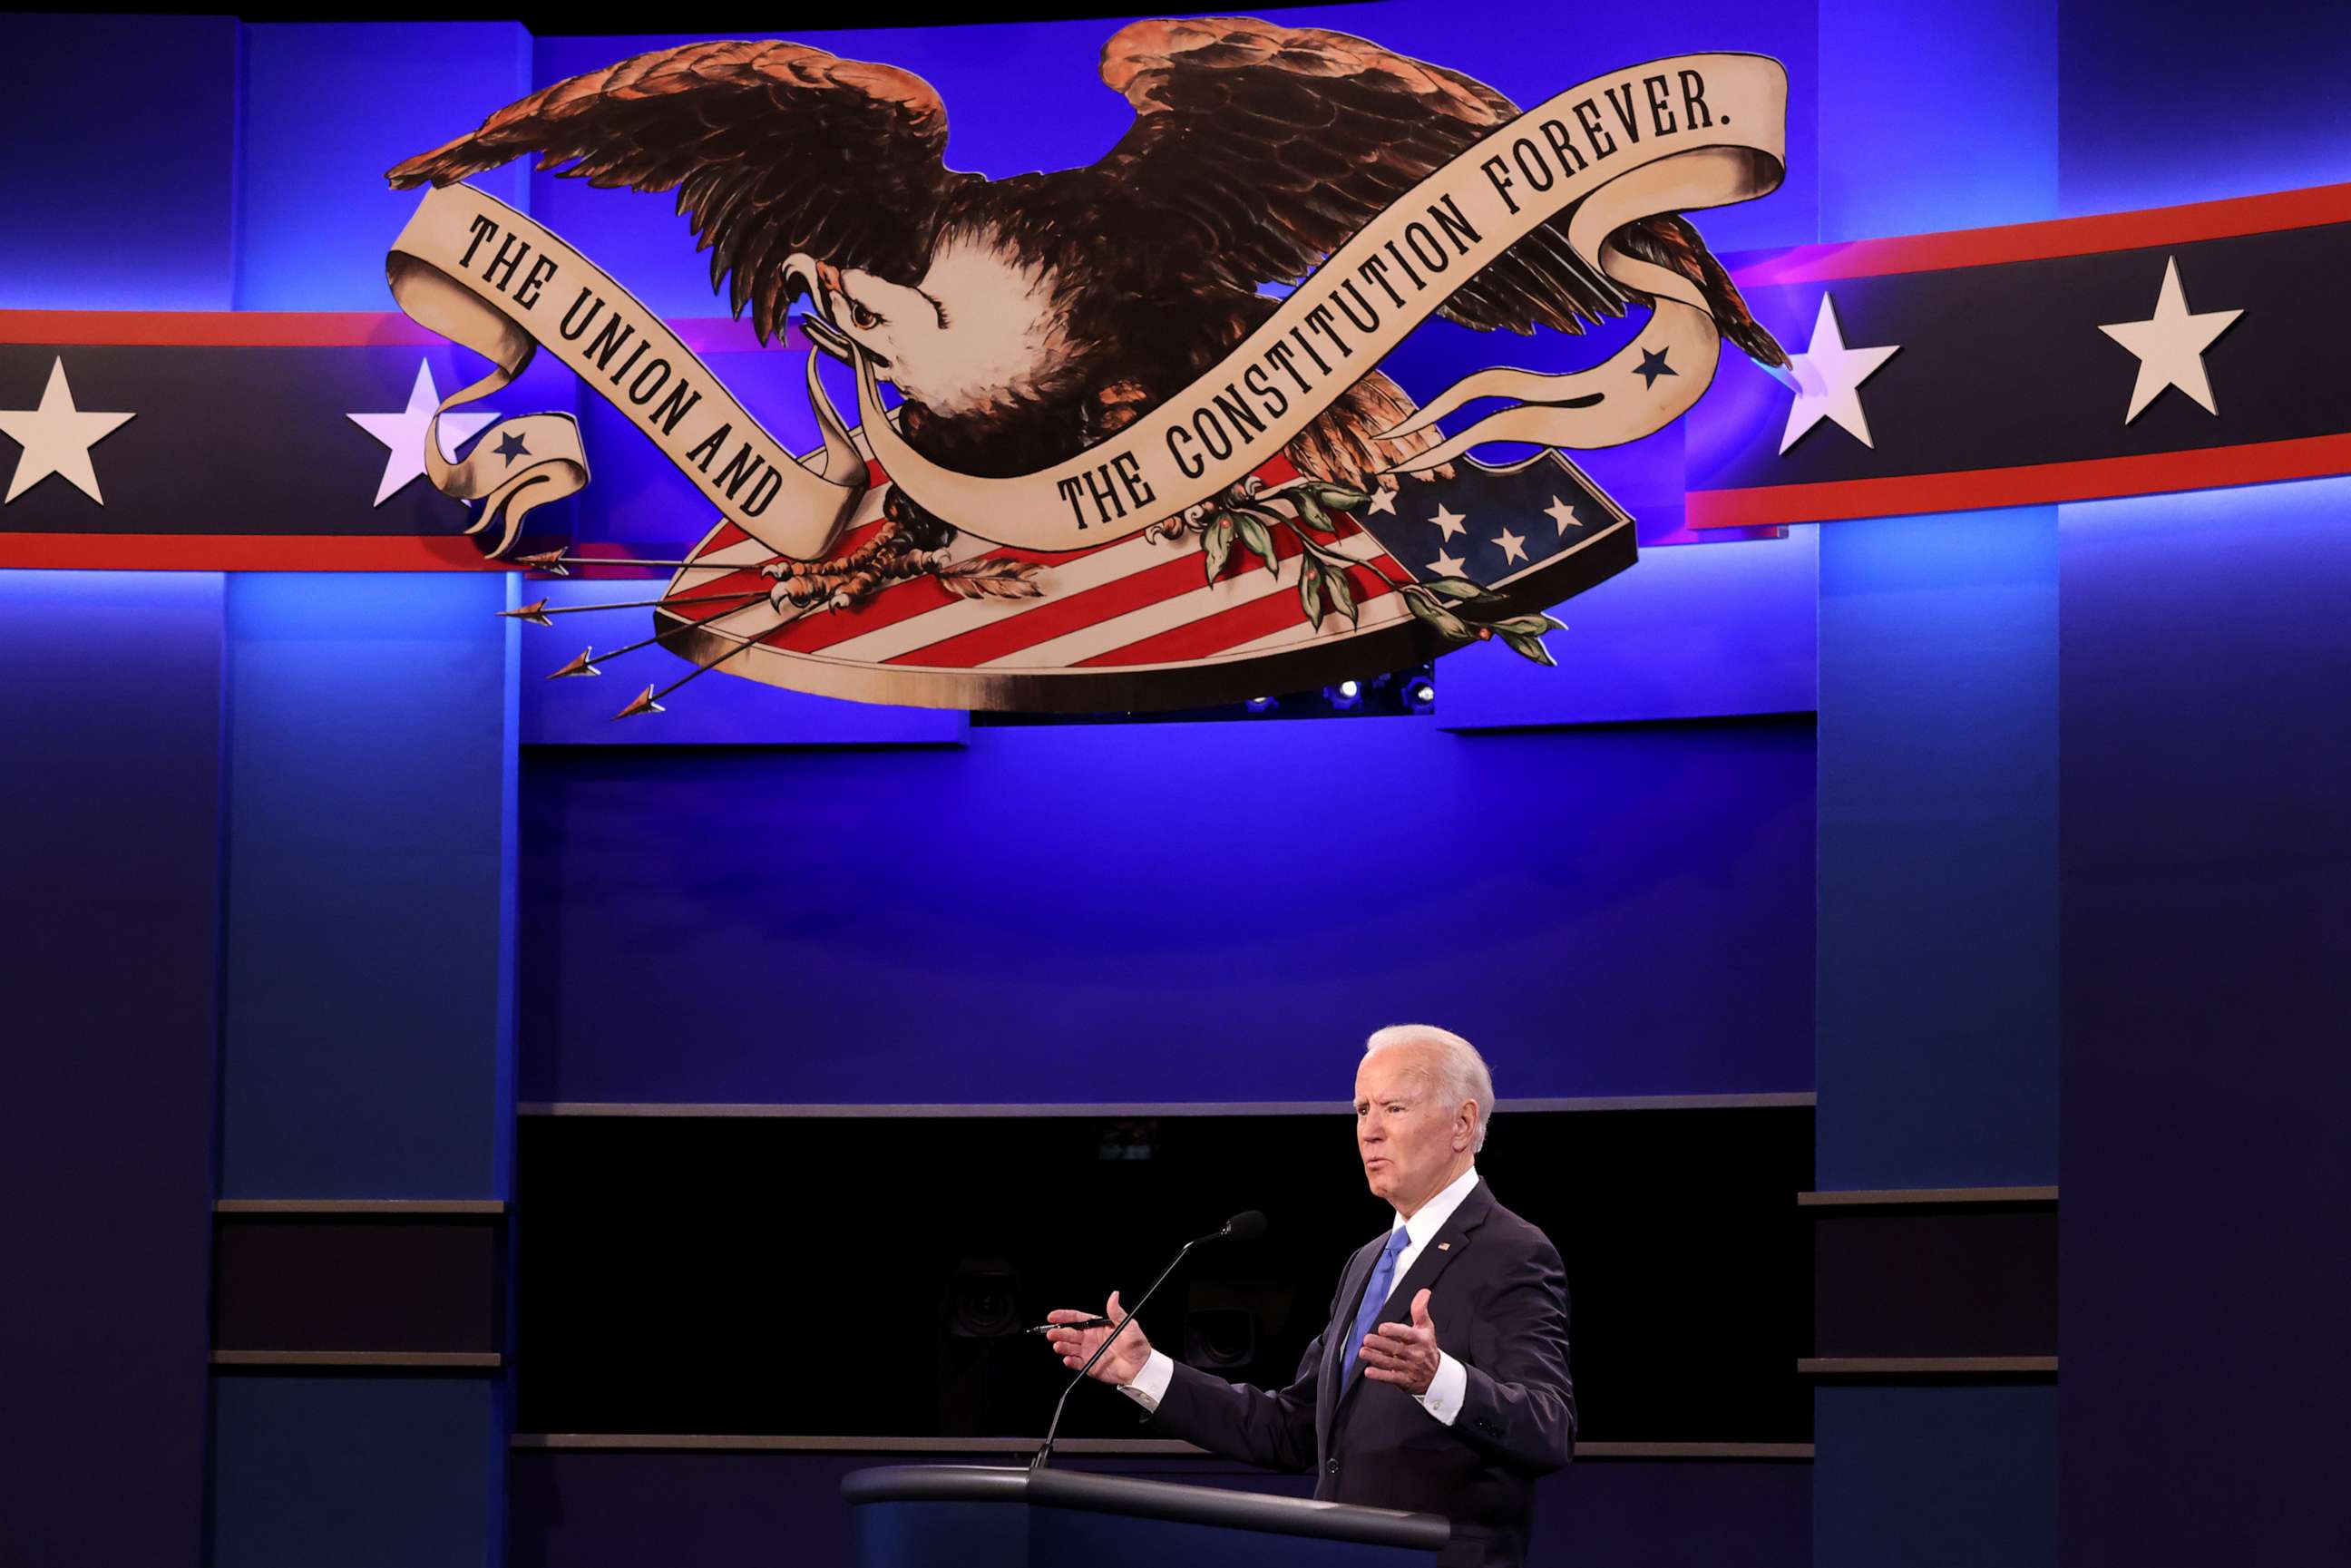 PHOTO: In this Oct. 22, 2020 file photo Democratic presidential nominee Joe Biden participates in the final presidential debate against U.S. President Donald Trump at Belmont University in Nashville, Tenn.